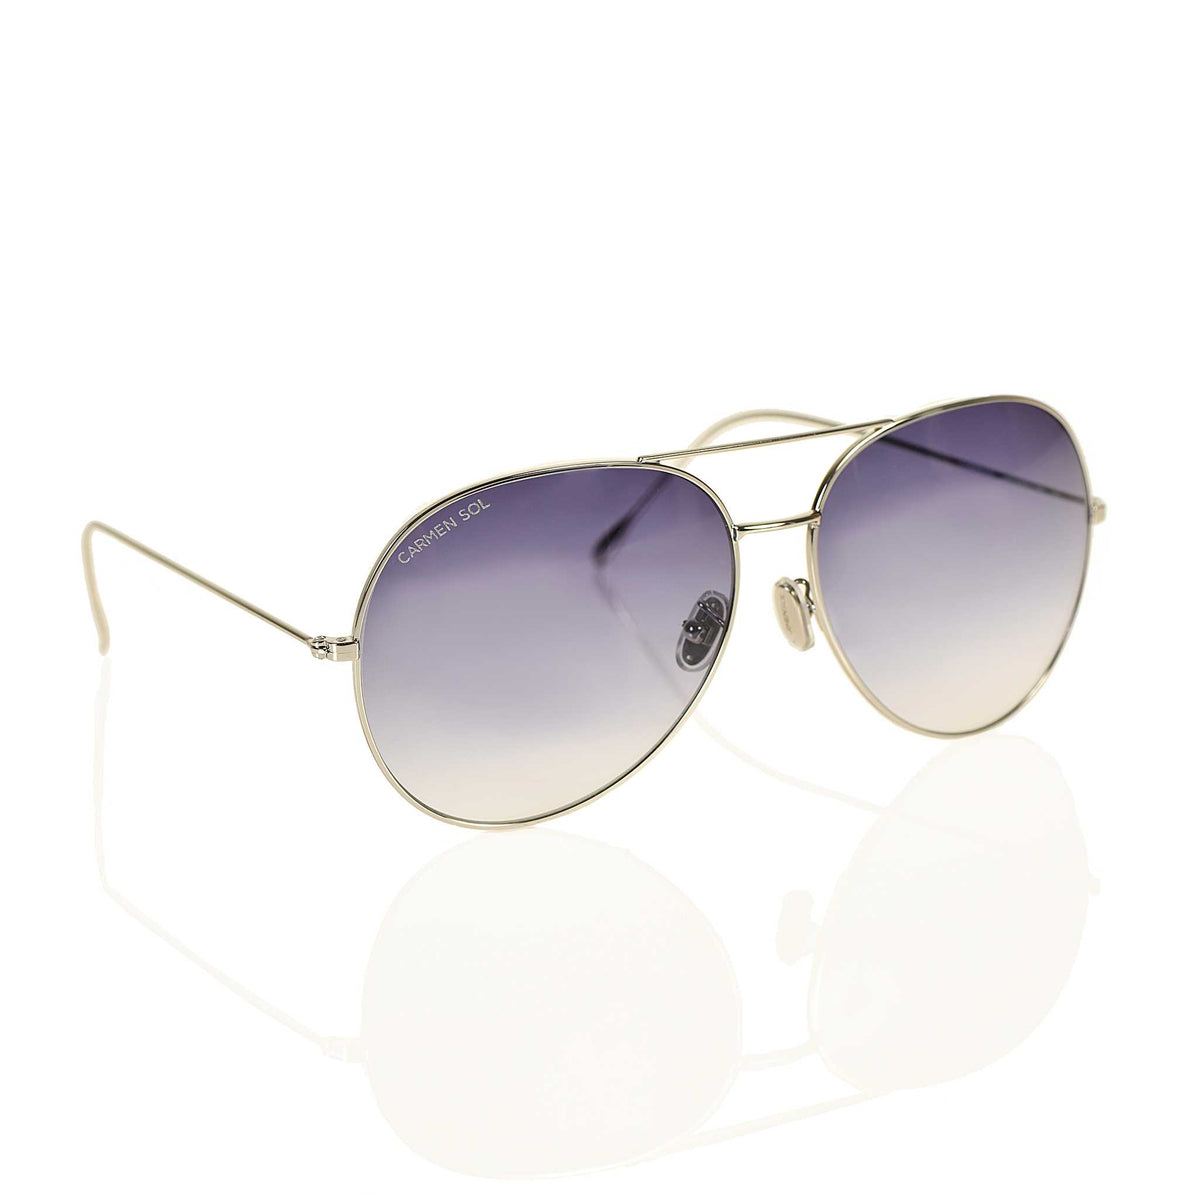 Silver aviator sunglasses classic for men and women